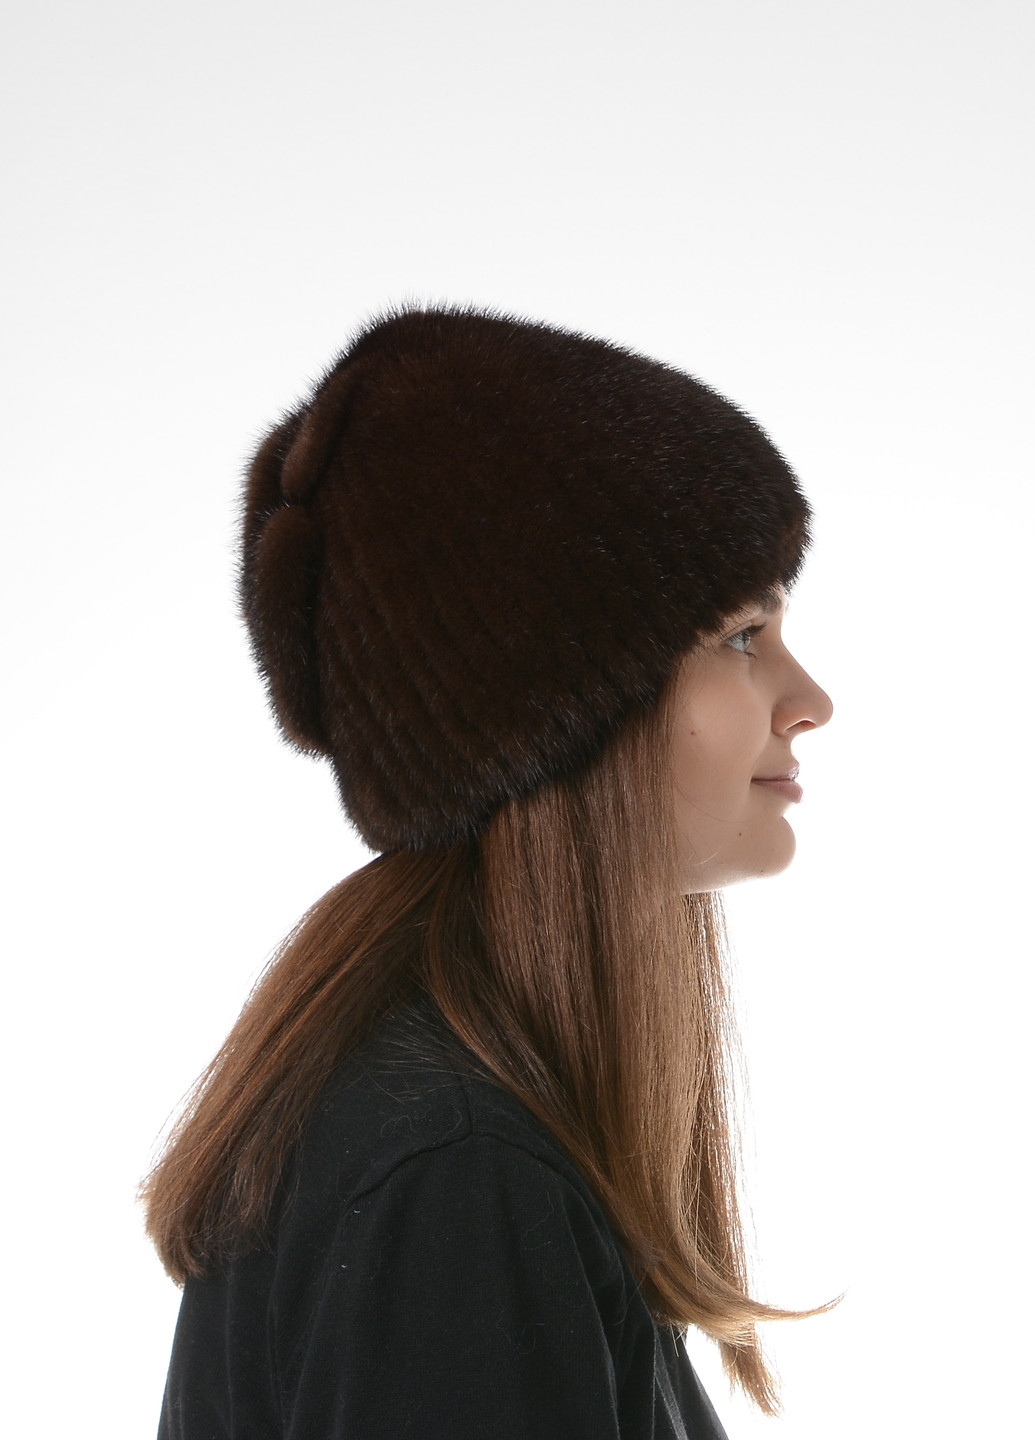 В'язана жіноча біні шапка з натурального хутра норки Меховой Стиль листок (257271855)